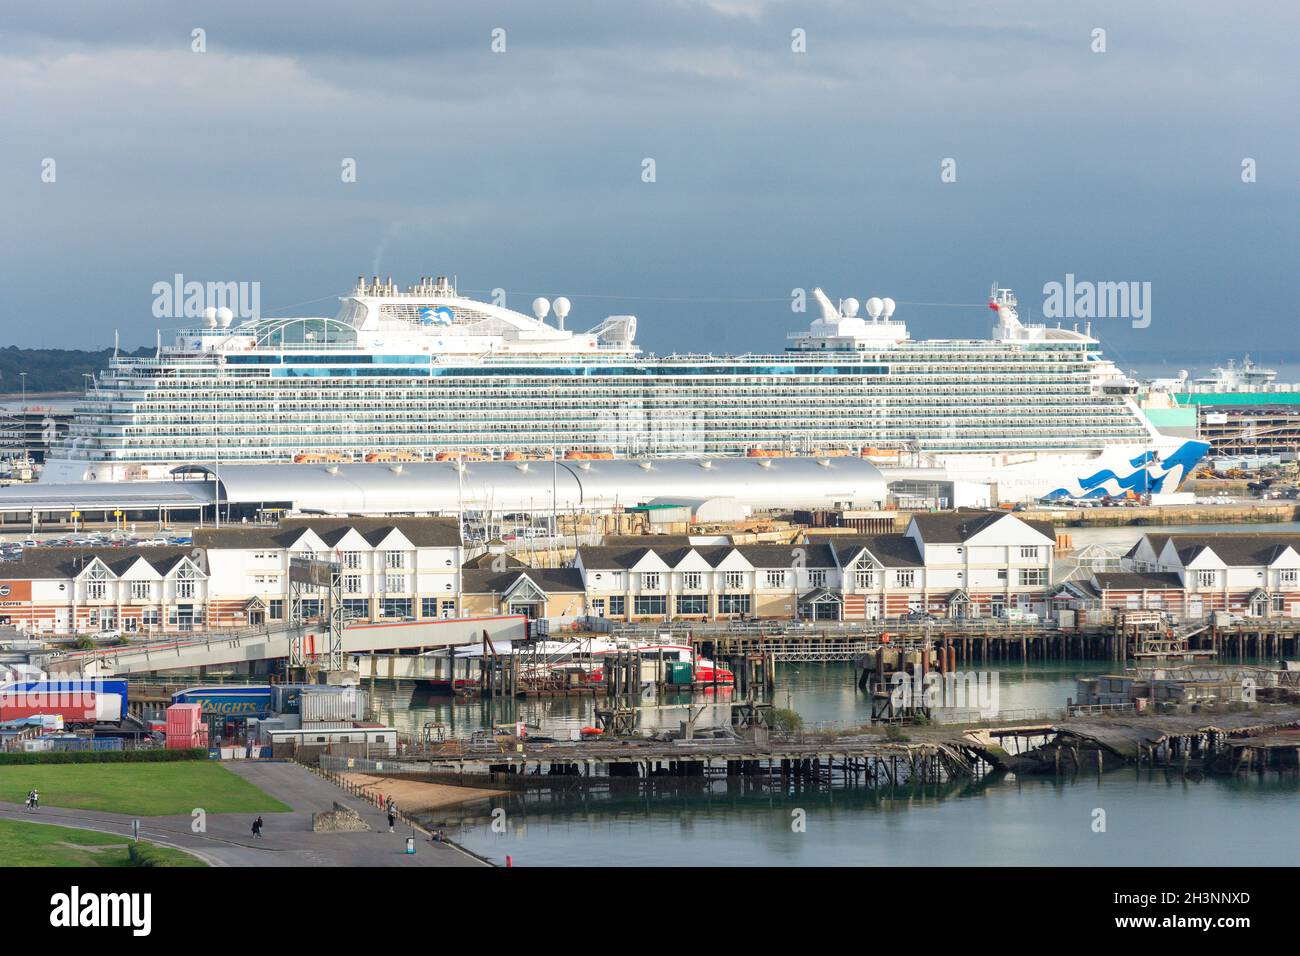 Princess Cruises Sky Princess cruise ship berthed in harbour, Southampton, Hampshire, England, United Kingdom Stock Photo